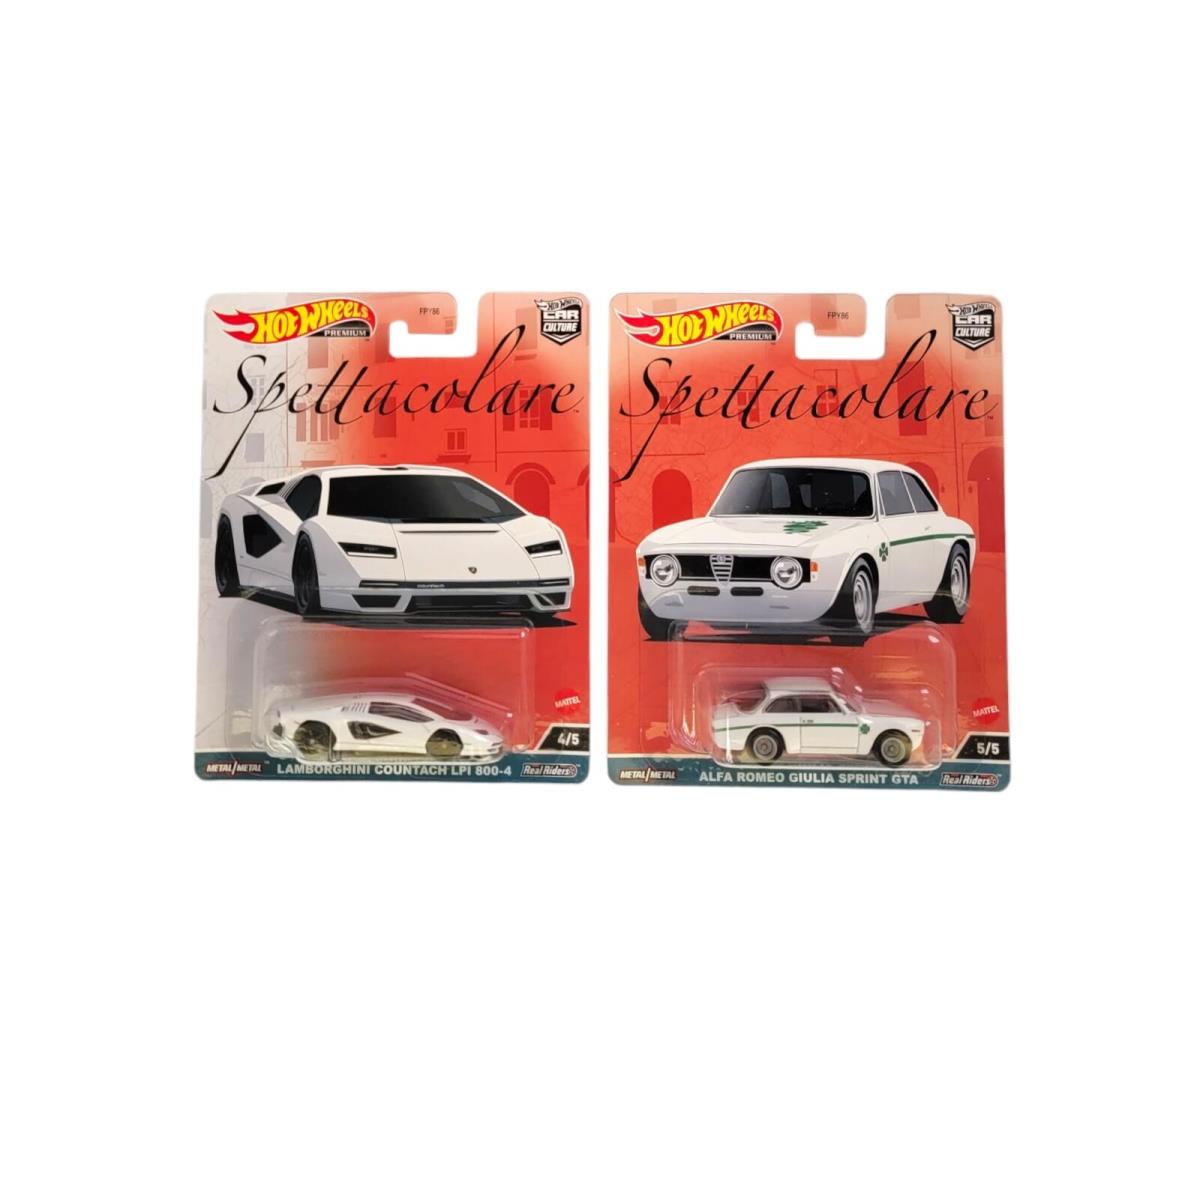 Car Culture 2023 Che Figata Spettacolare Complete Set of 5 Diecast Vehicles